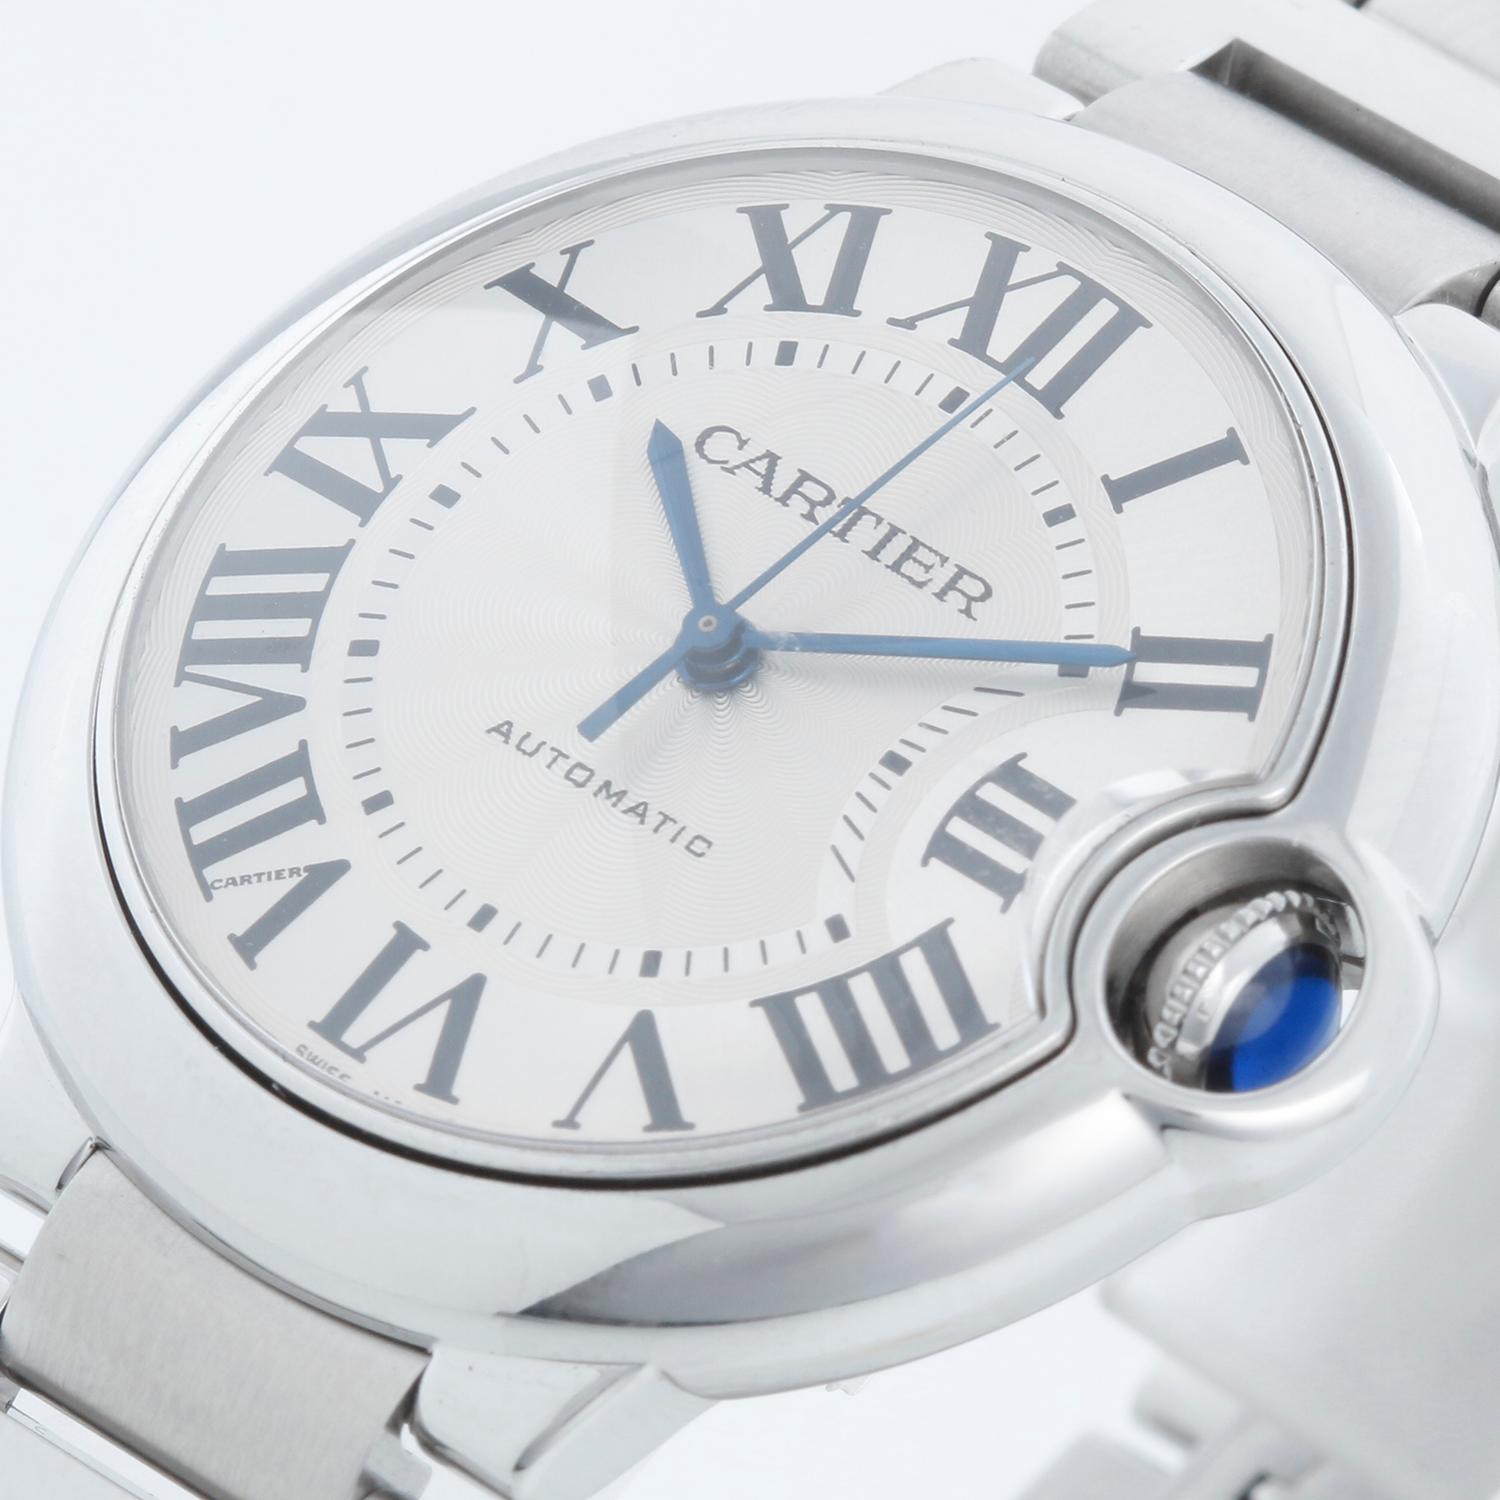 Women's or Men's Cartier Ballon Bleu Midsize Stainless Steel Watch W6920046 3284 For Sale